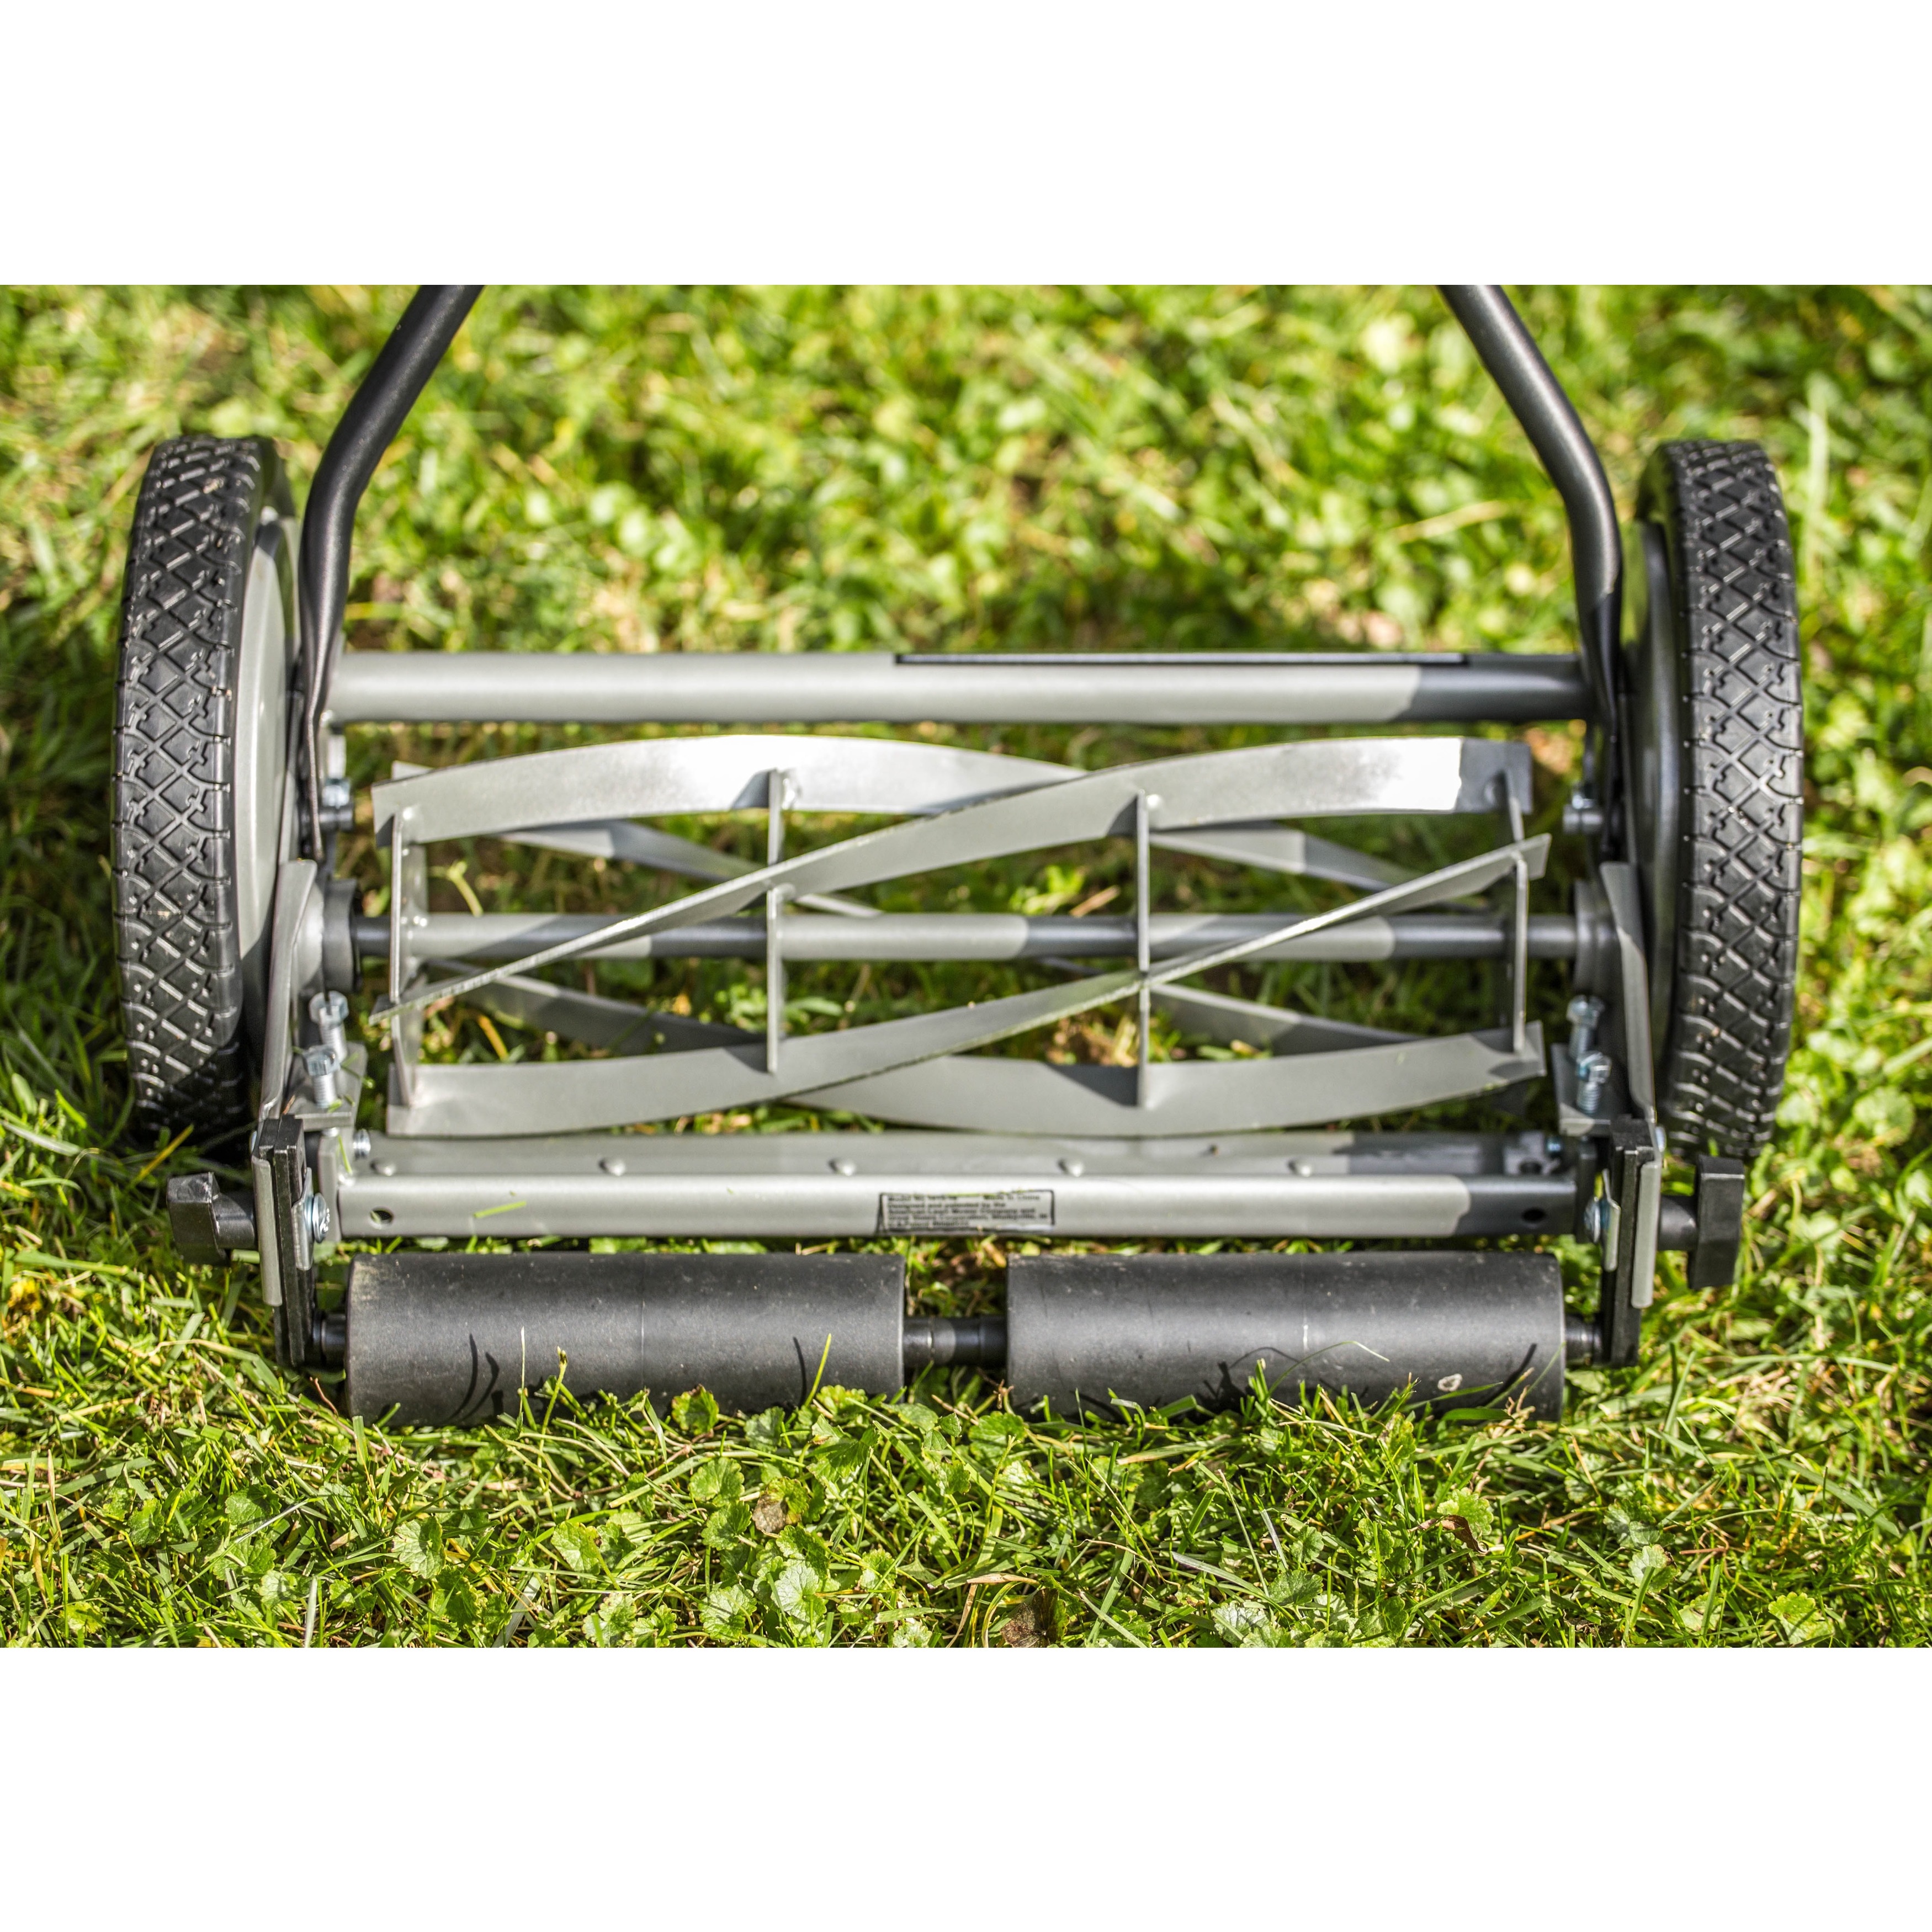 American Lawn Mower Company 16-inch 7-Blade Reel Mower - Bed Bath & Beyond  - 36681834